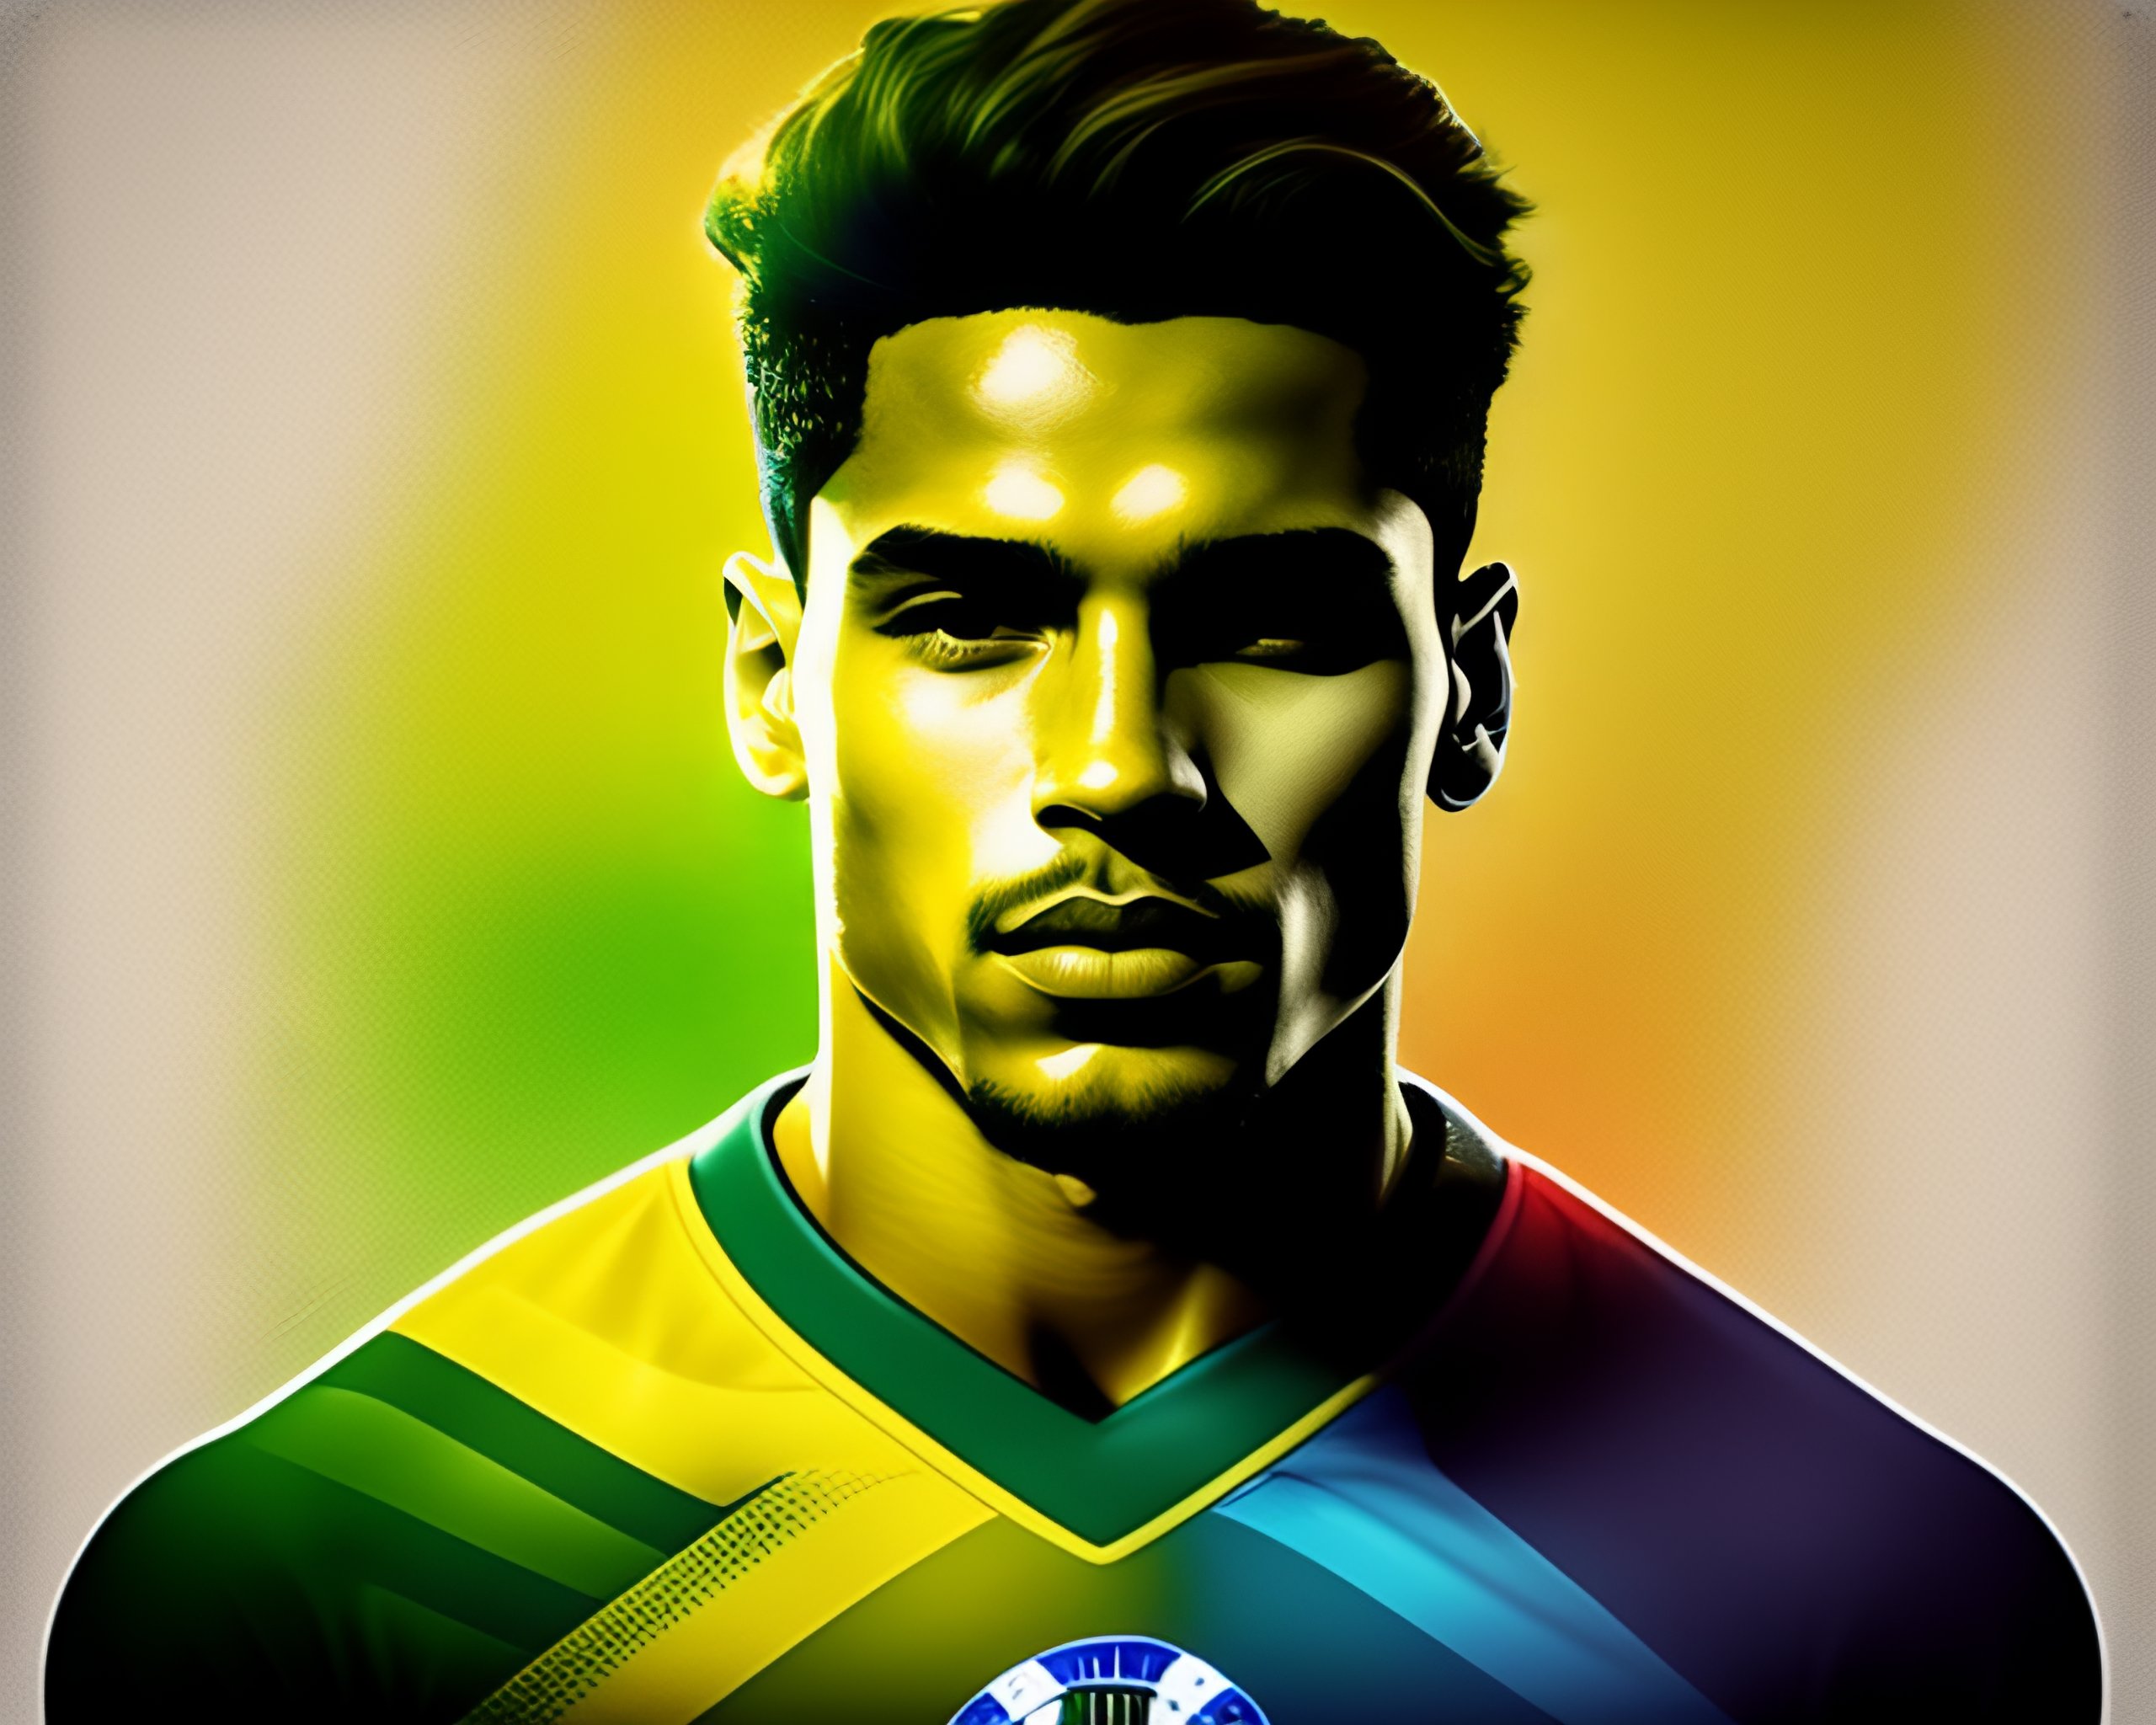 Lexica - Make a pop art of a soccer player with brazil jersey